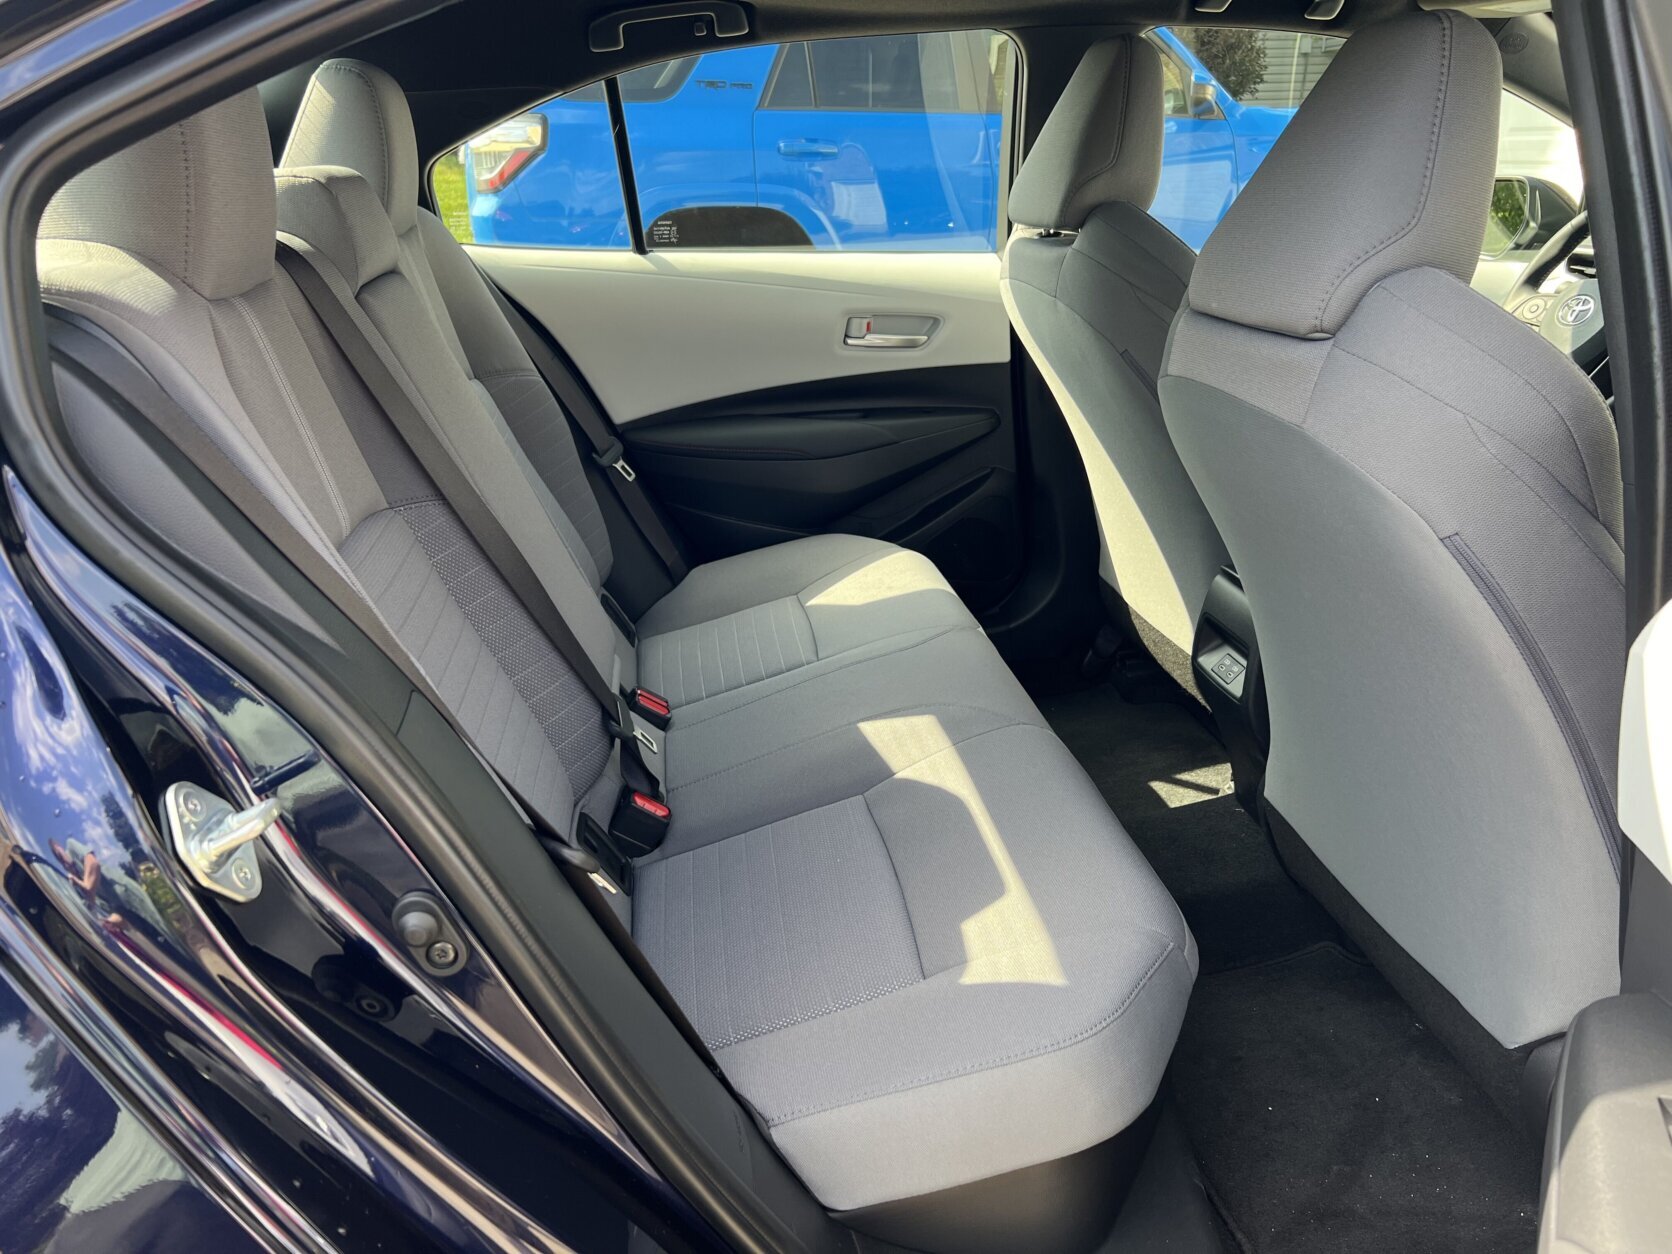 Interior of Toyota Corolla Hybrid SE